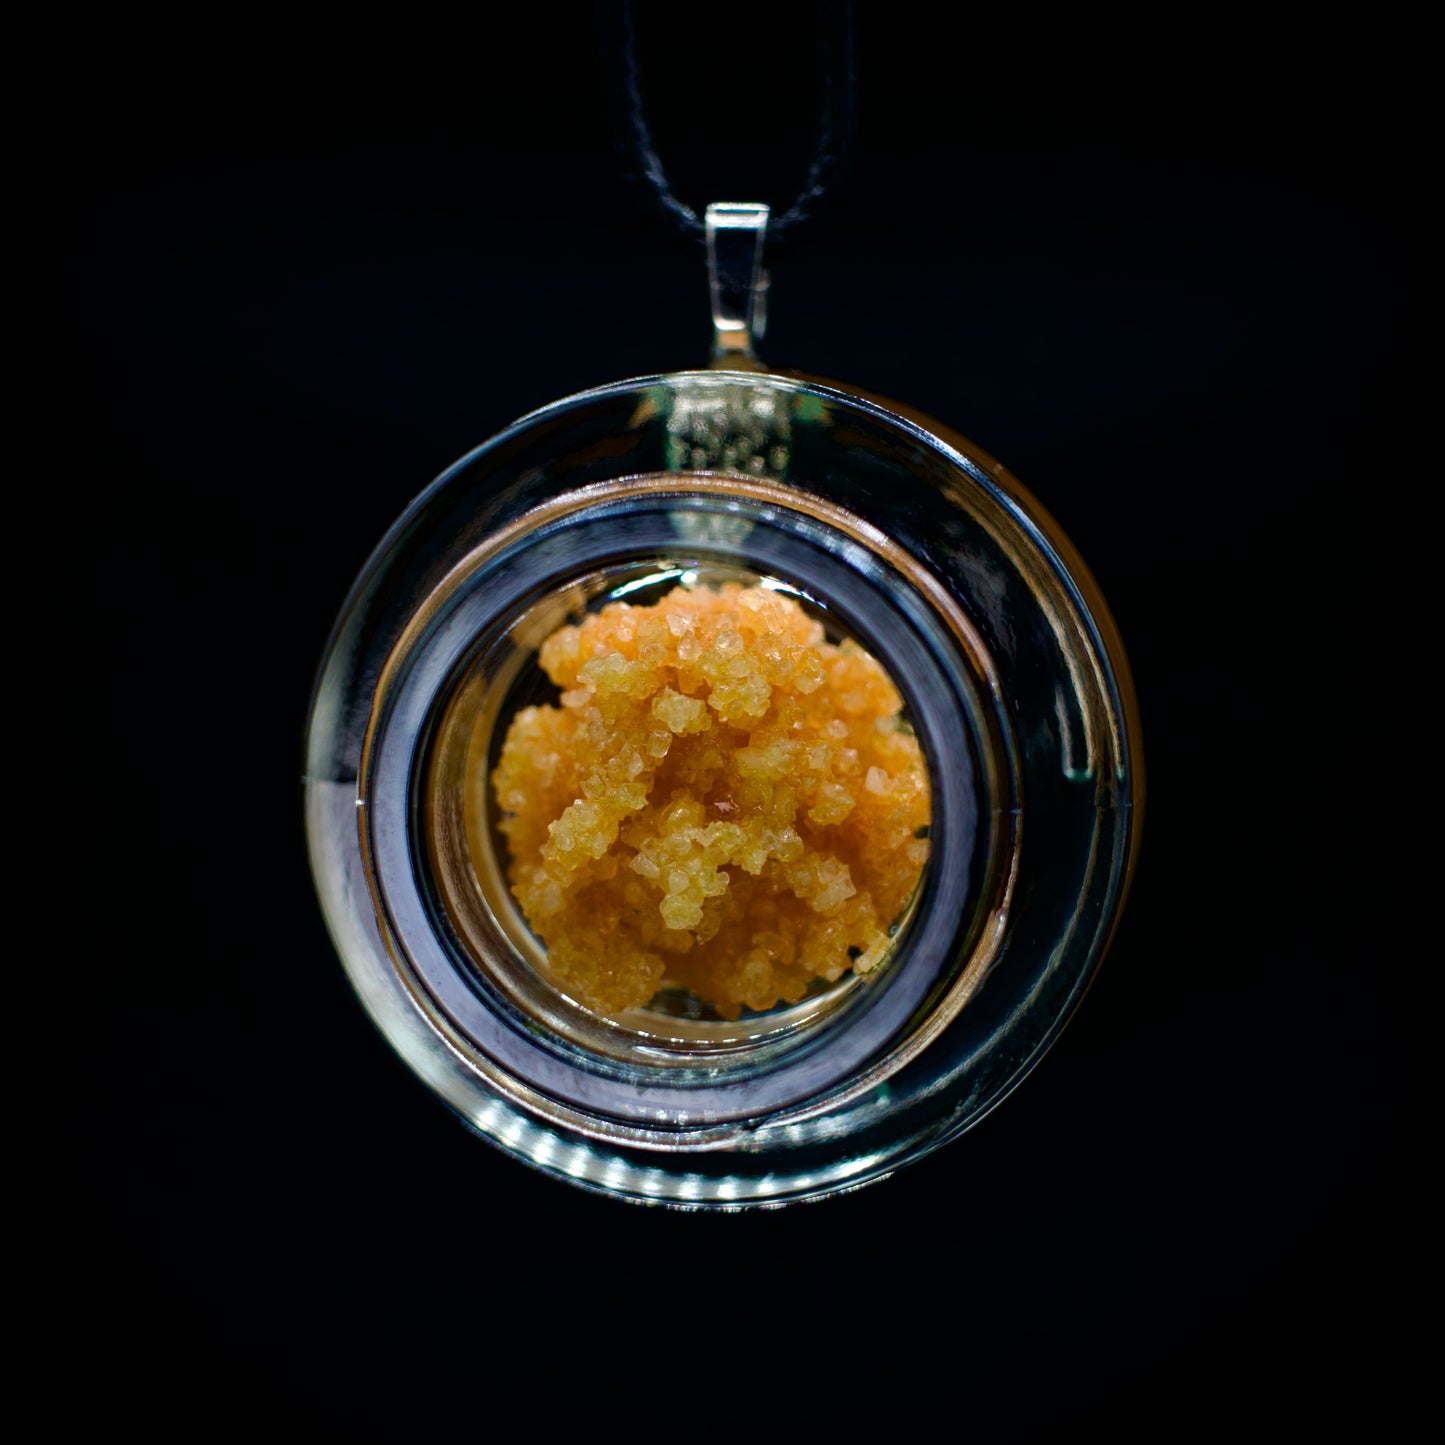 Salty’s Sea Salt Faux concentrates Pendants - Dark Orange Ice Water Hash - Small Jar